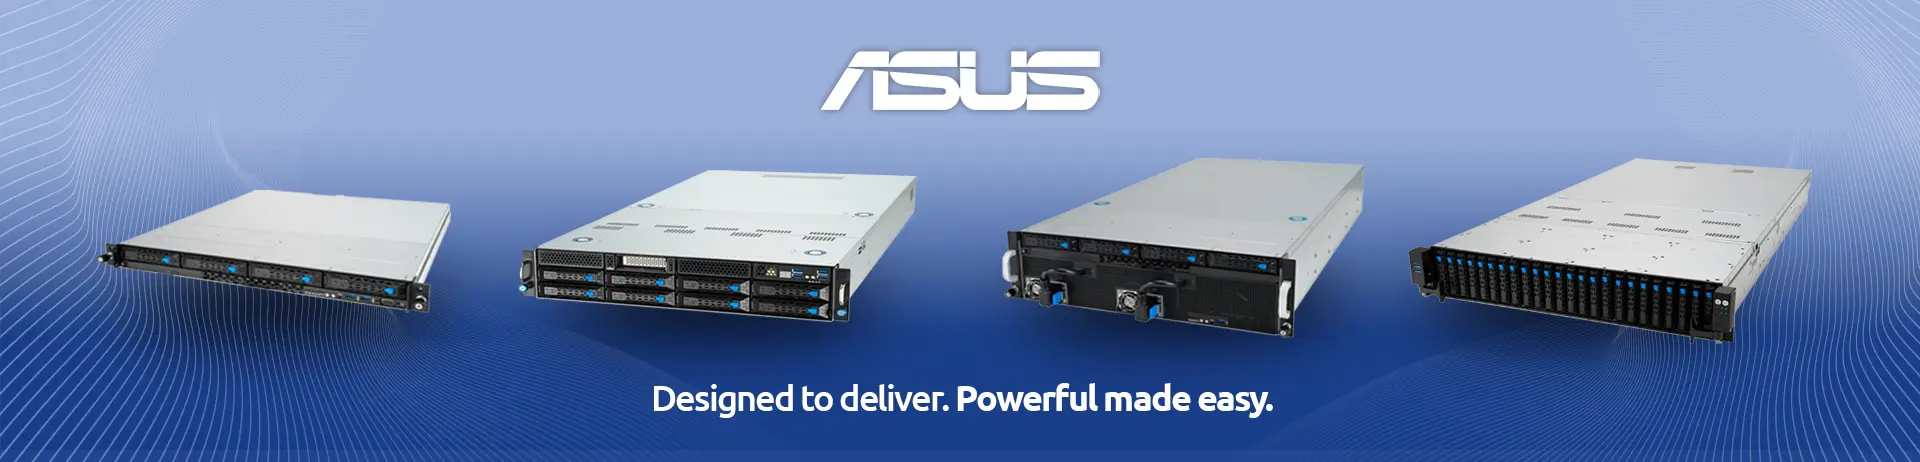 Asus Motherboards and Server Barebones